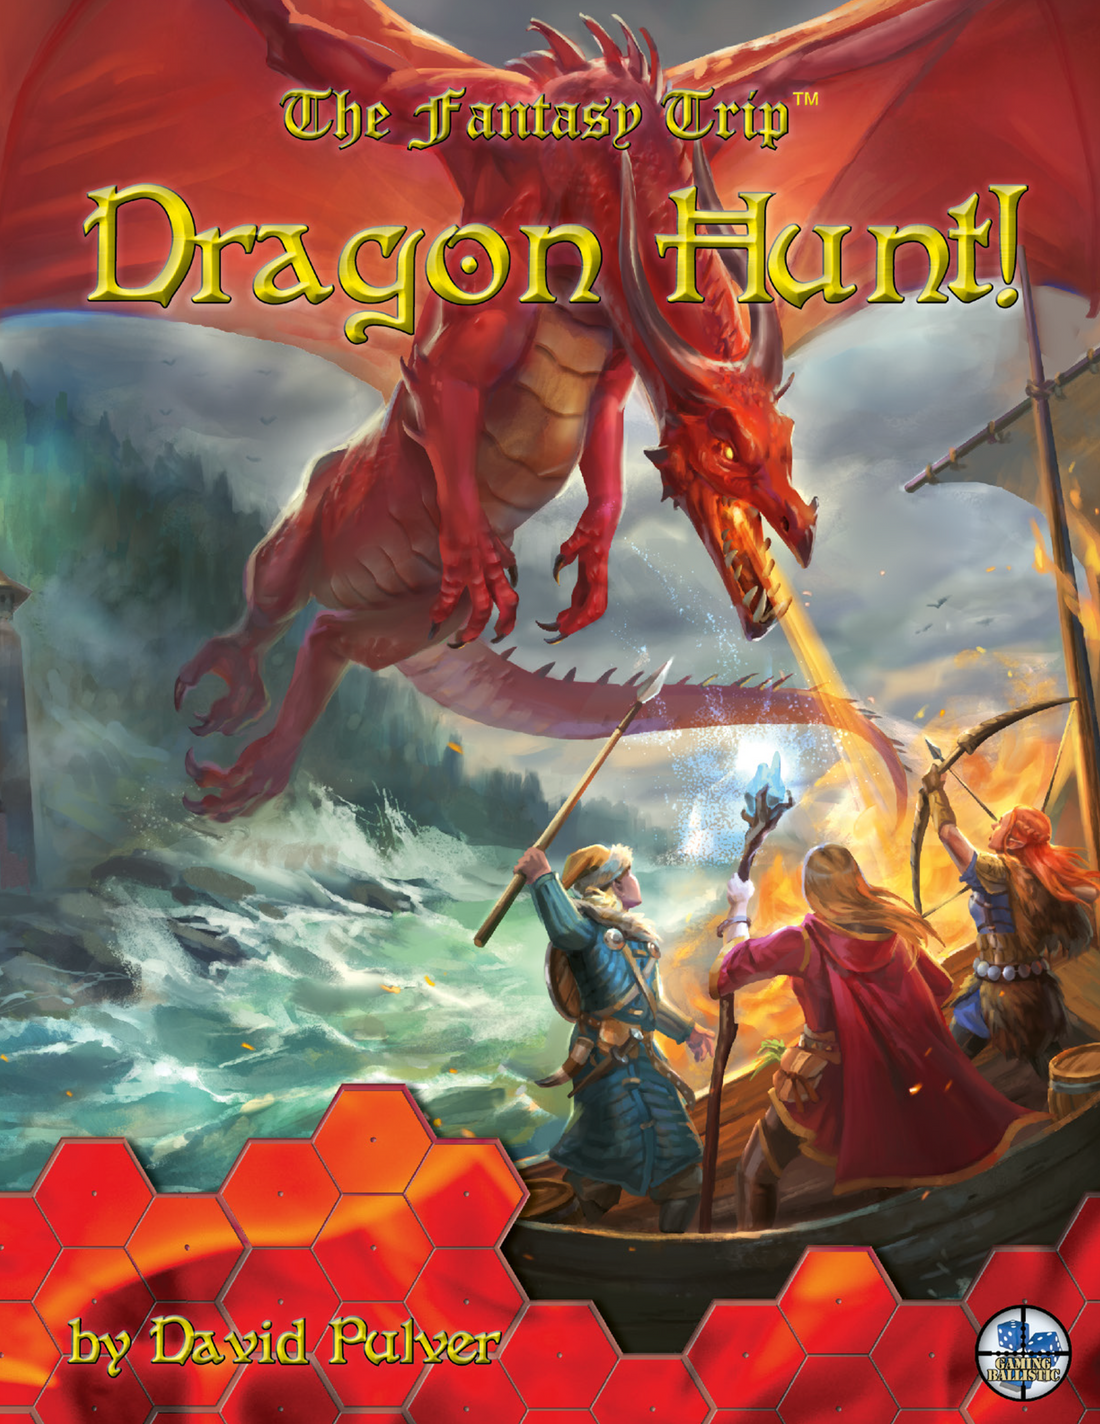 Dragon Hunt! (The Fantasy Trip)